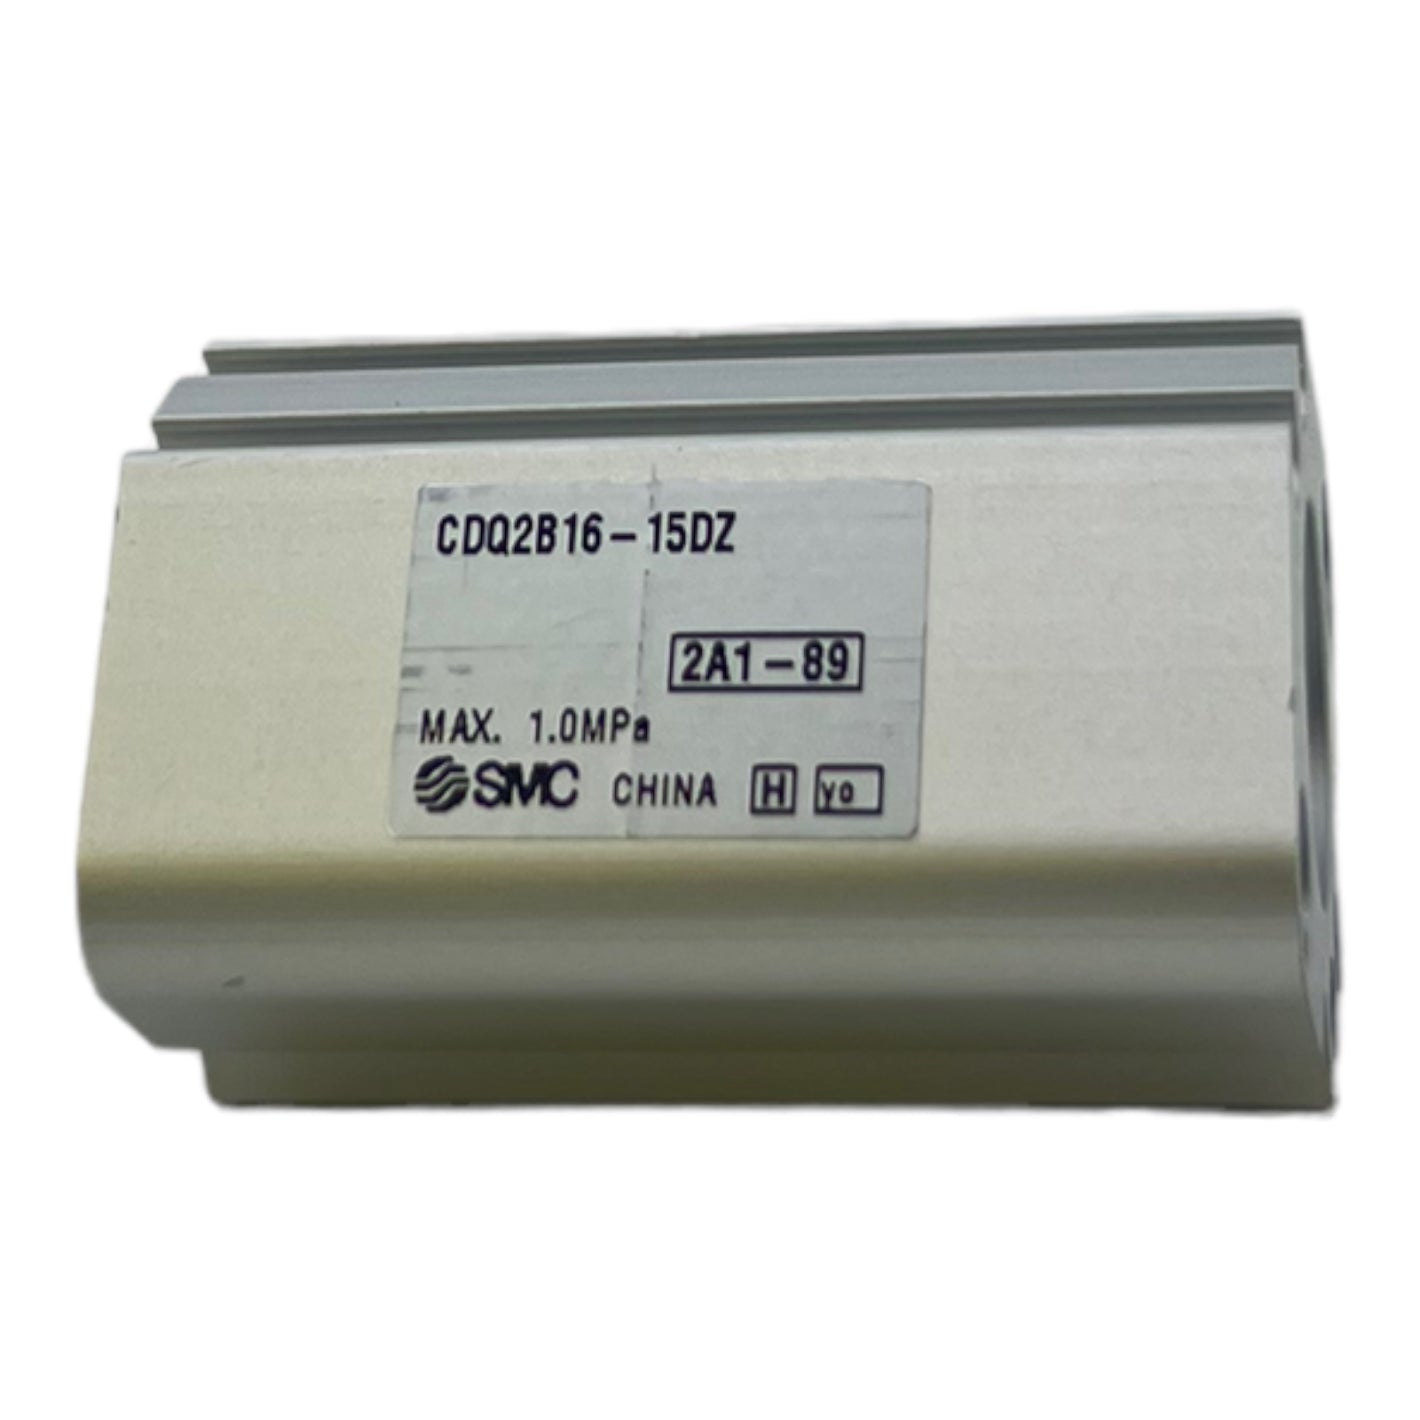 SMC CDQ2B16-15DZ compact cylinder pneumatics MAX. 1.0MPa 